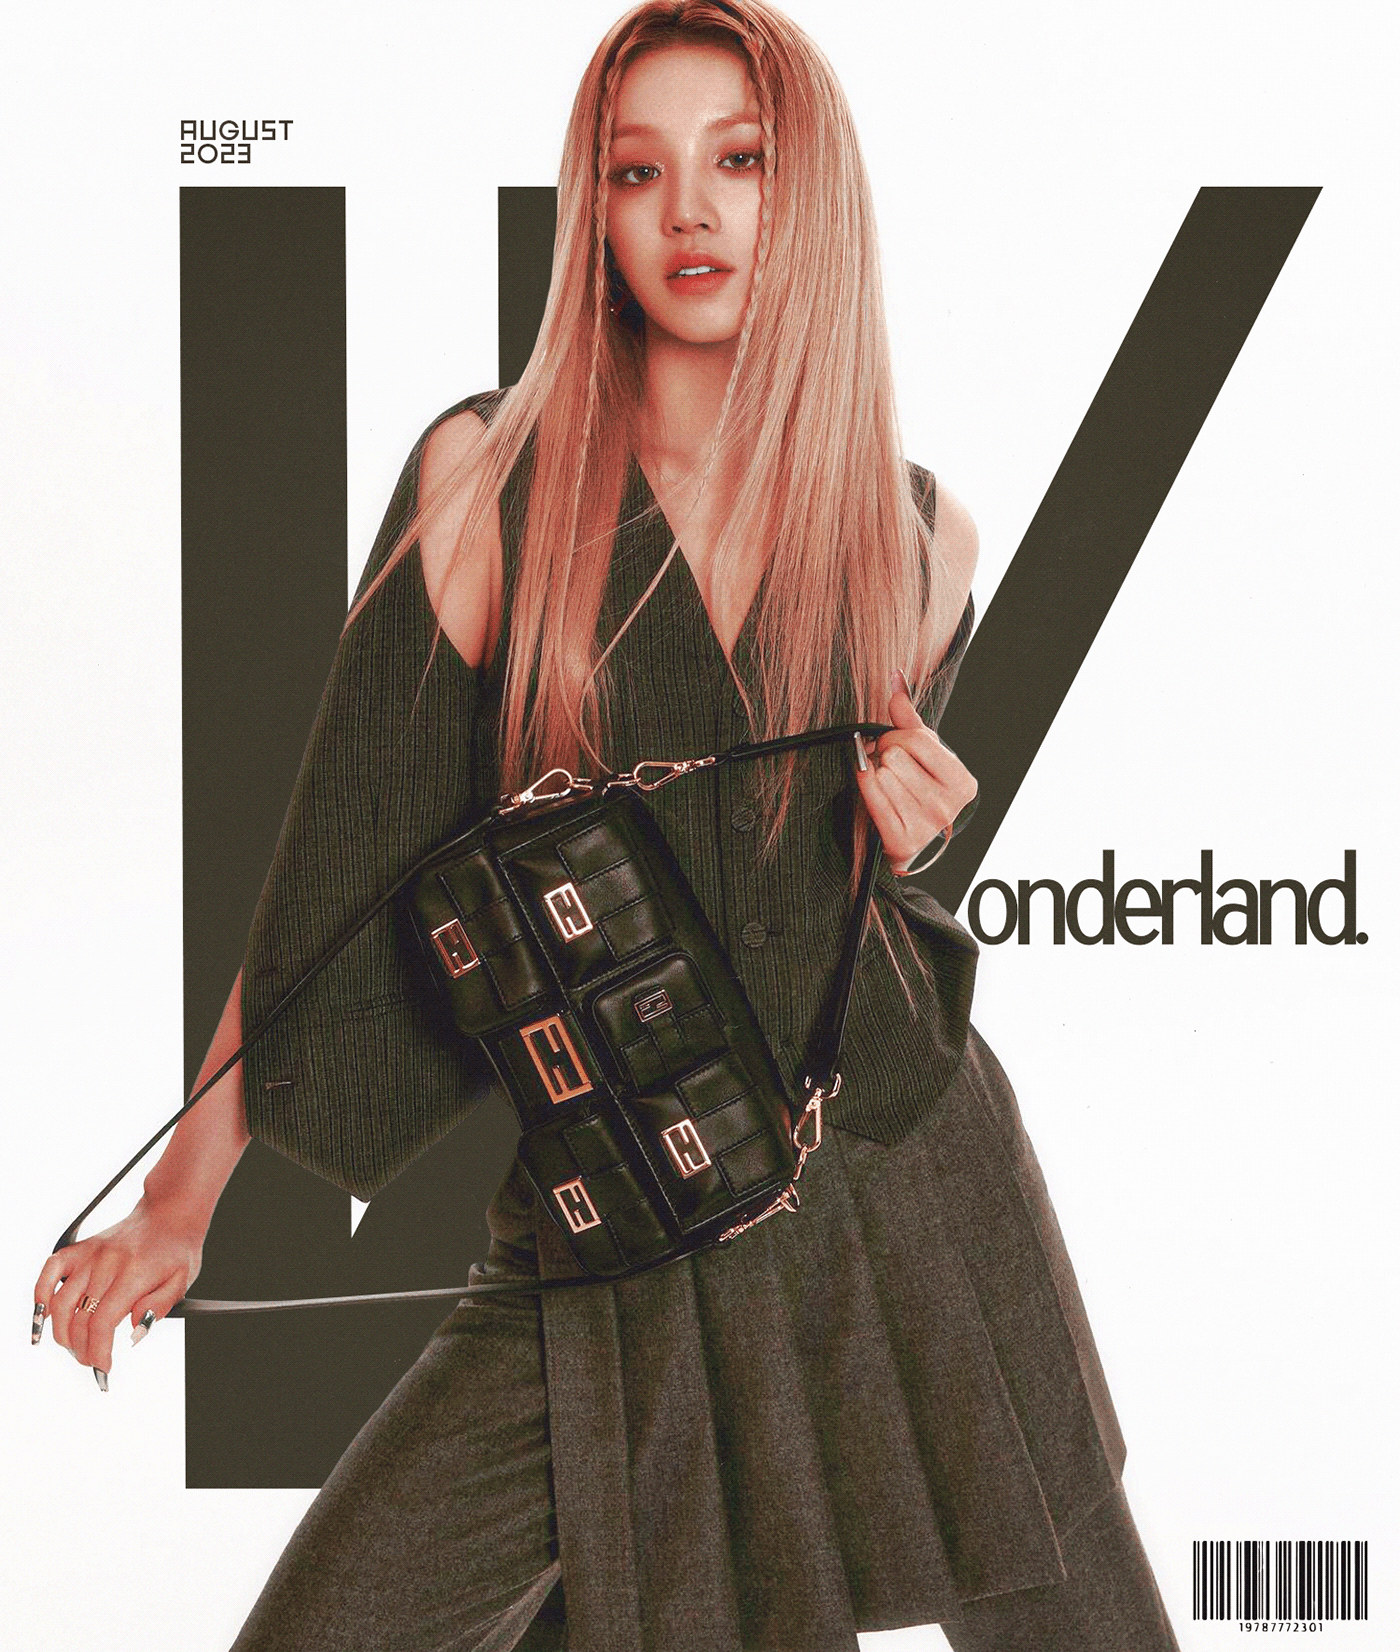 Gidle kpop kpop poster Magazine design wonderland Layout Poster Design kpop fanart kpop fan art Yuqi